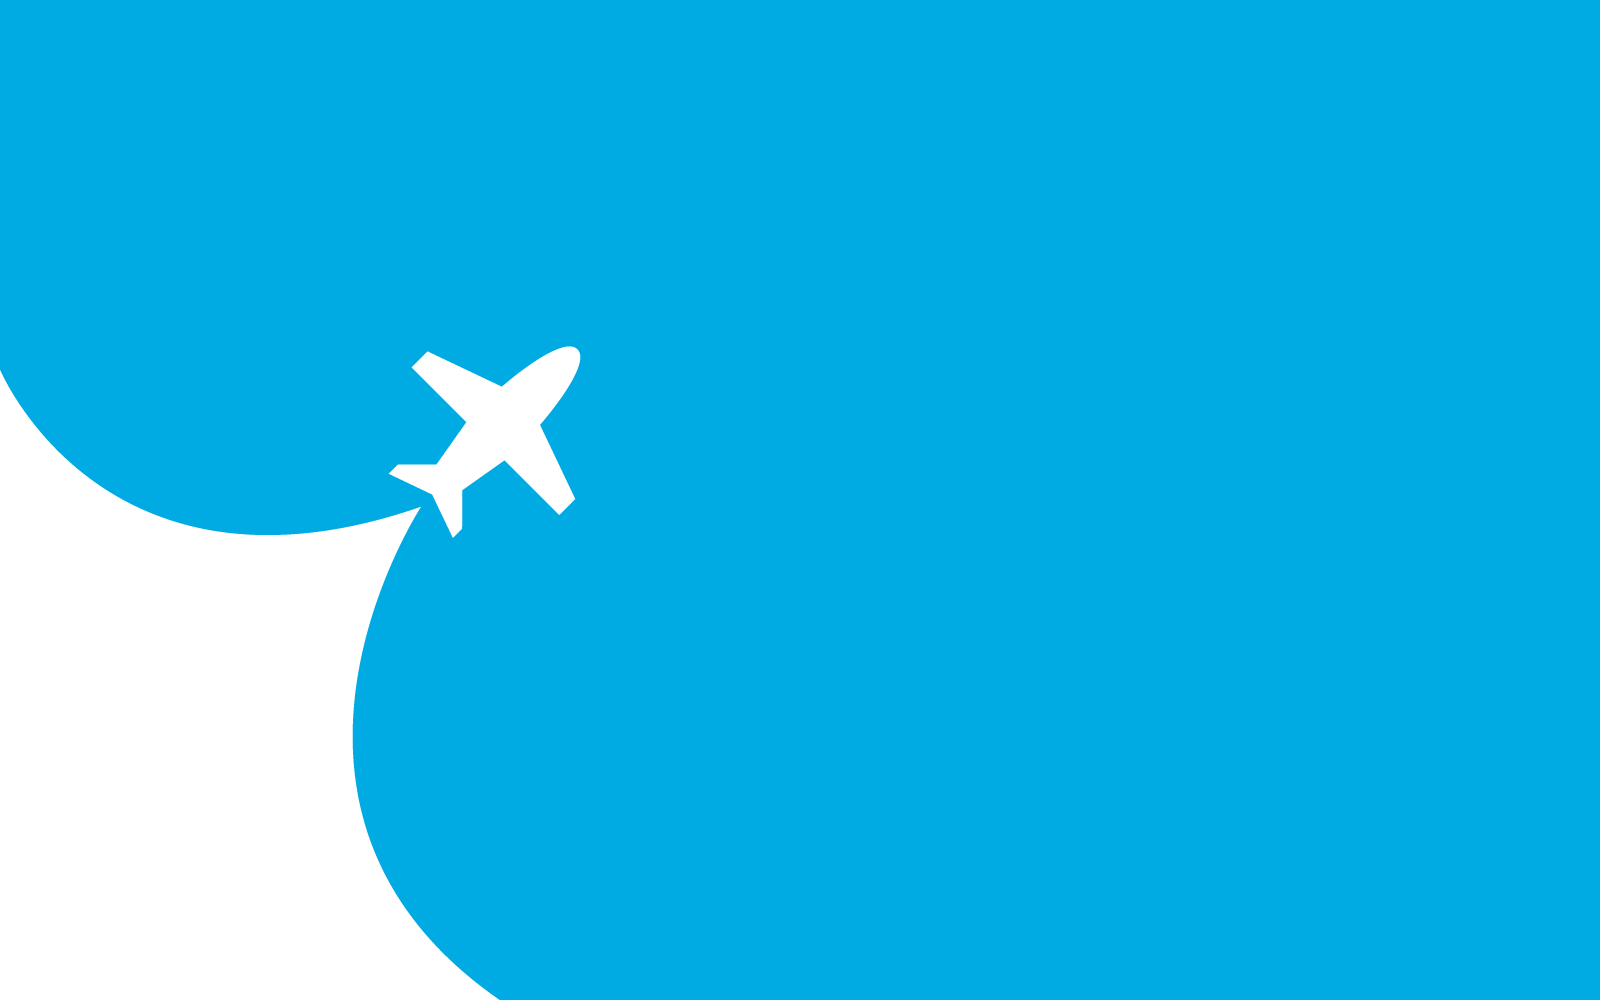 Air Plane illustration logo on blue background vector template Logo Template